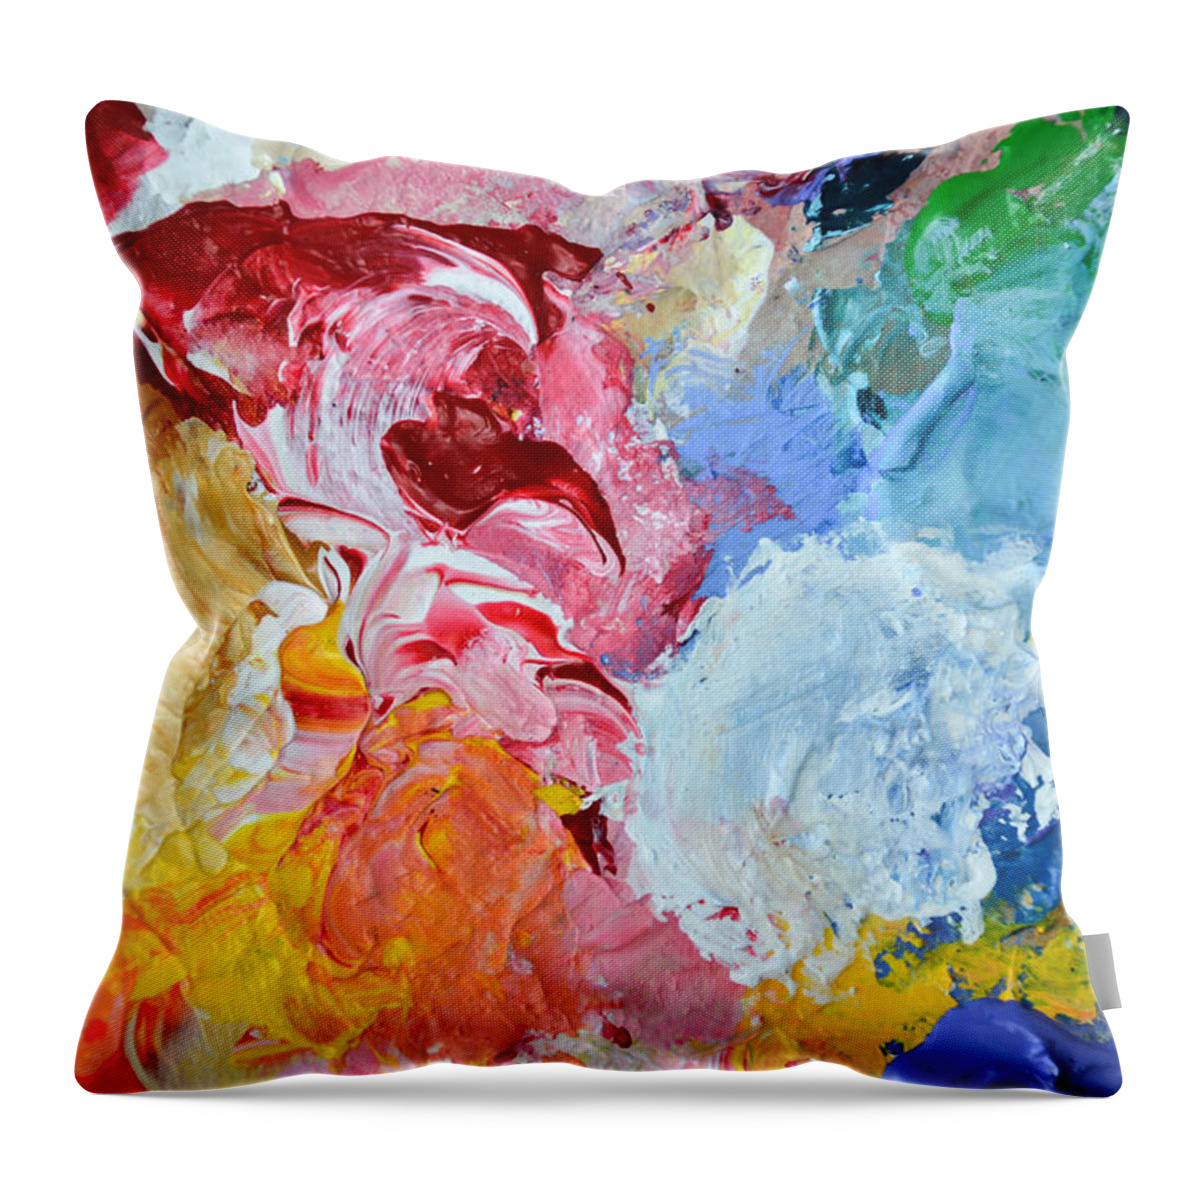 Colors Throw Pillow featuring the photograph An Artful Blend by Andrea Platt